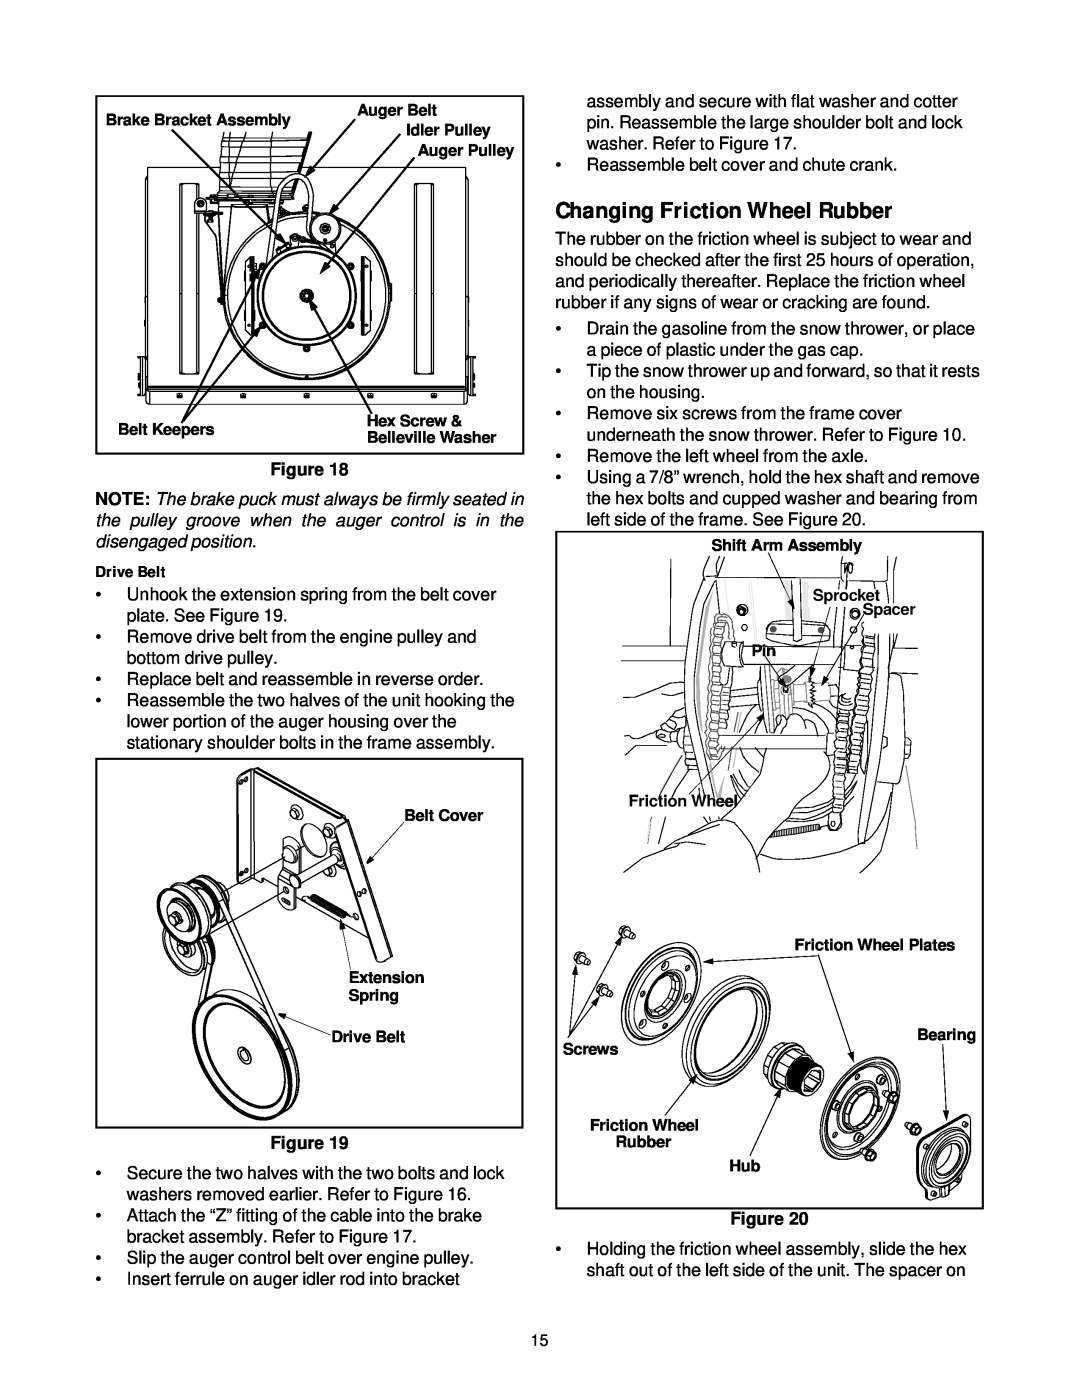 Yard-Man 31AE993J401 manual Drive Belt, Changing Friction Wheel Rubber 